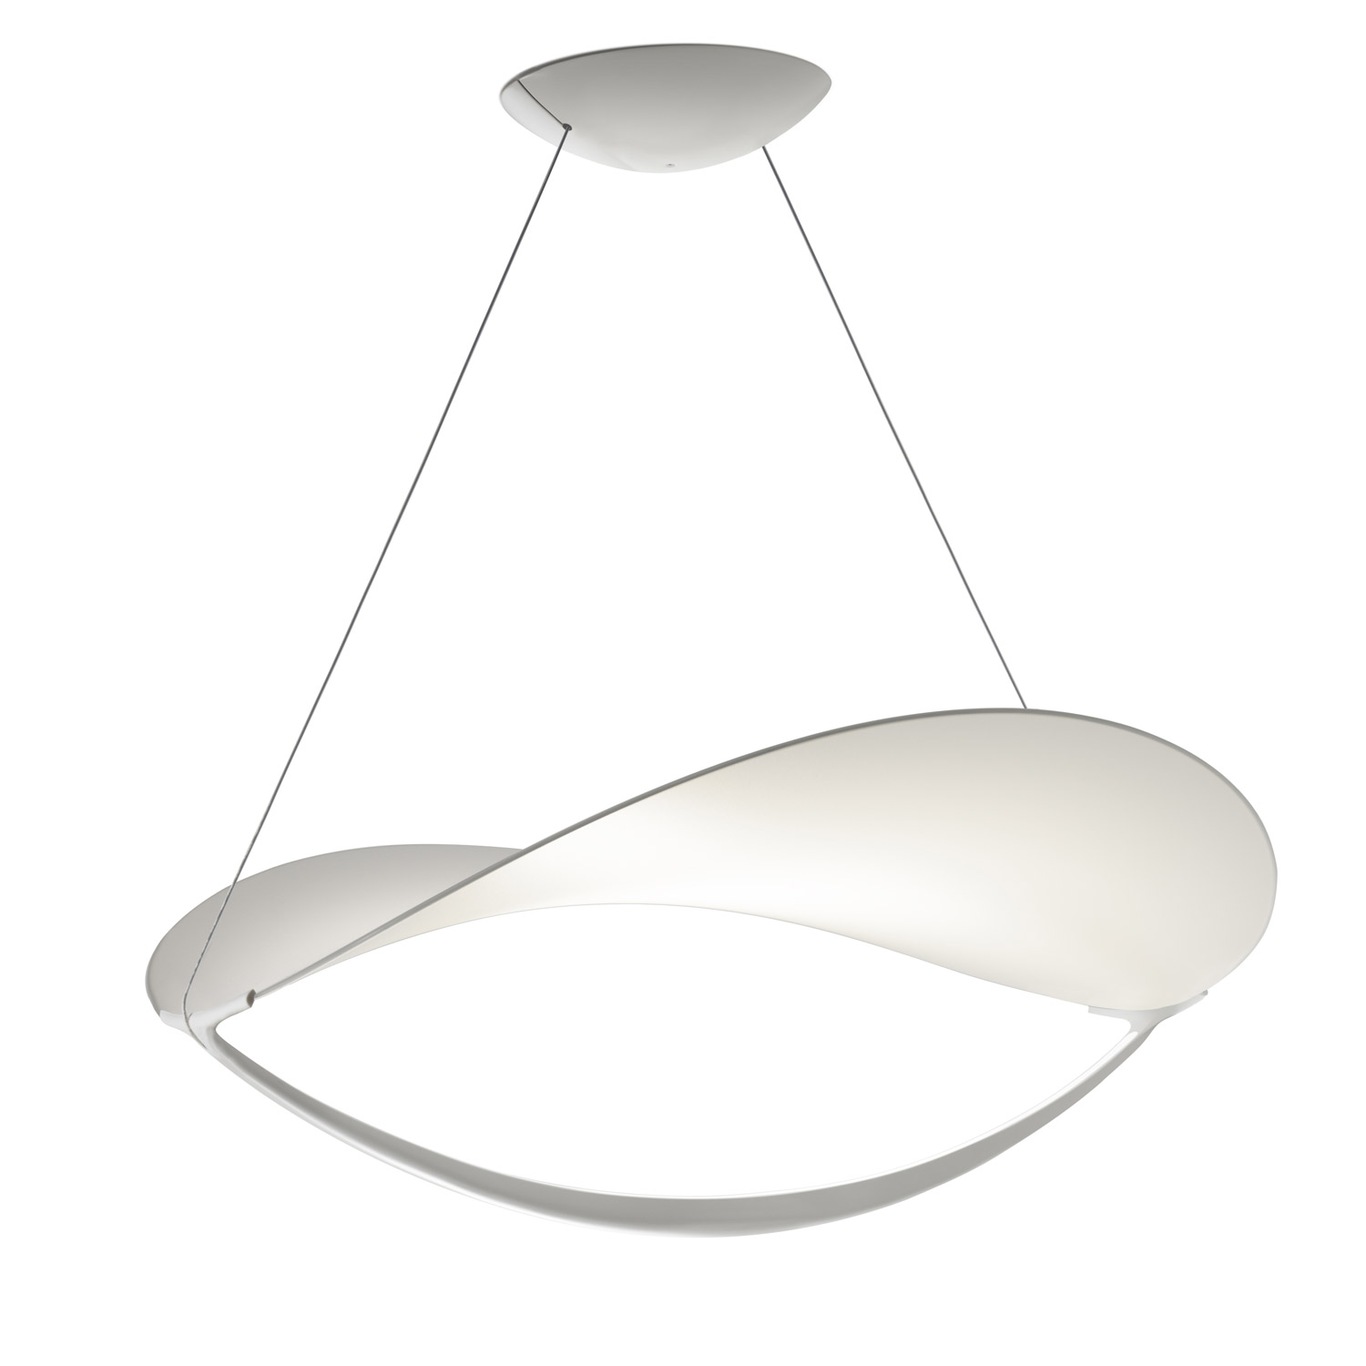 Plena Mylight Ceiling Lamp, White